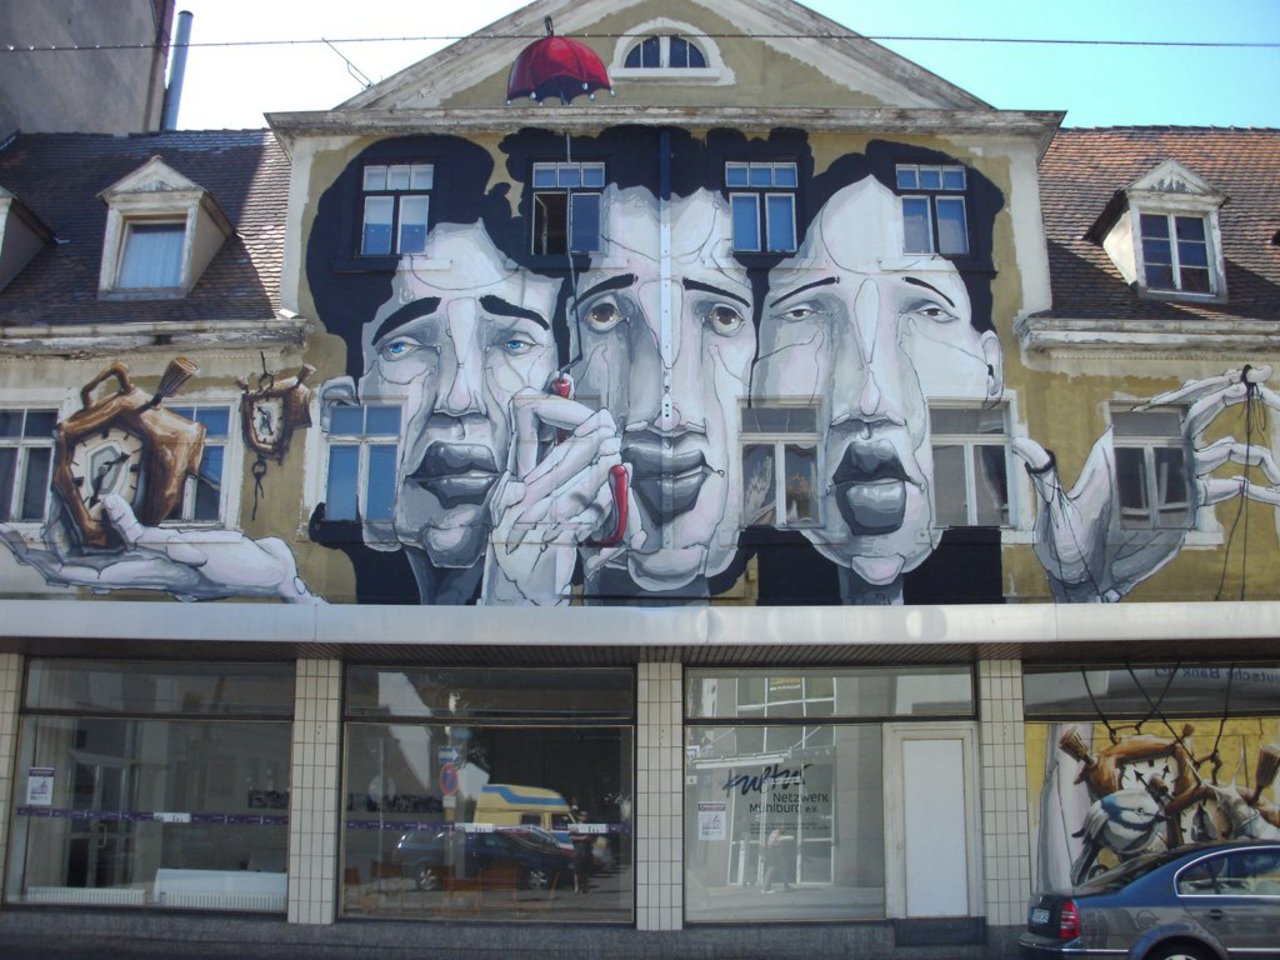 Stunning Art by German artist Dome in Karlsruhe, Germany #straßenkunst #streetart #artecallejero #urbanart #artedistrada #artderue #граффити #graffiti #muralart #arteurbano #стритарт #urbanekunst #dome #karlsruhe #germany  via http://windbiel.de | https://goo.gl/Fjg3NH https://t.co/gYXCUE52gN